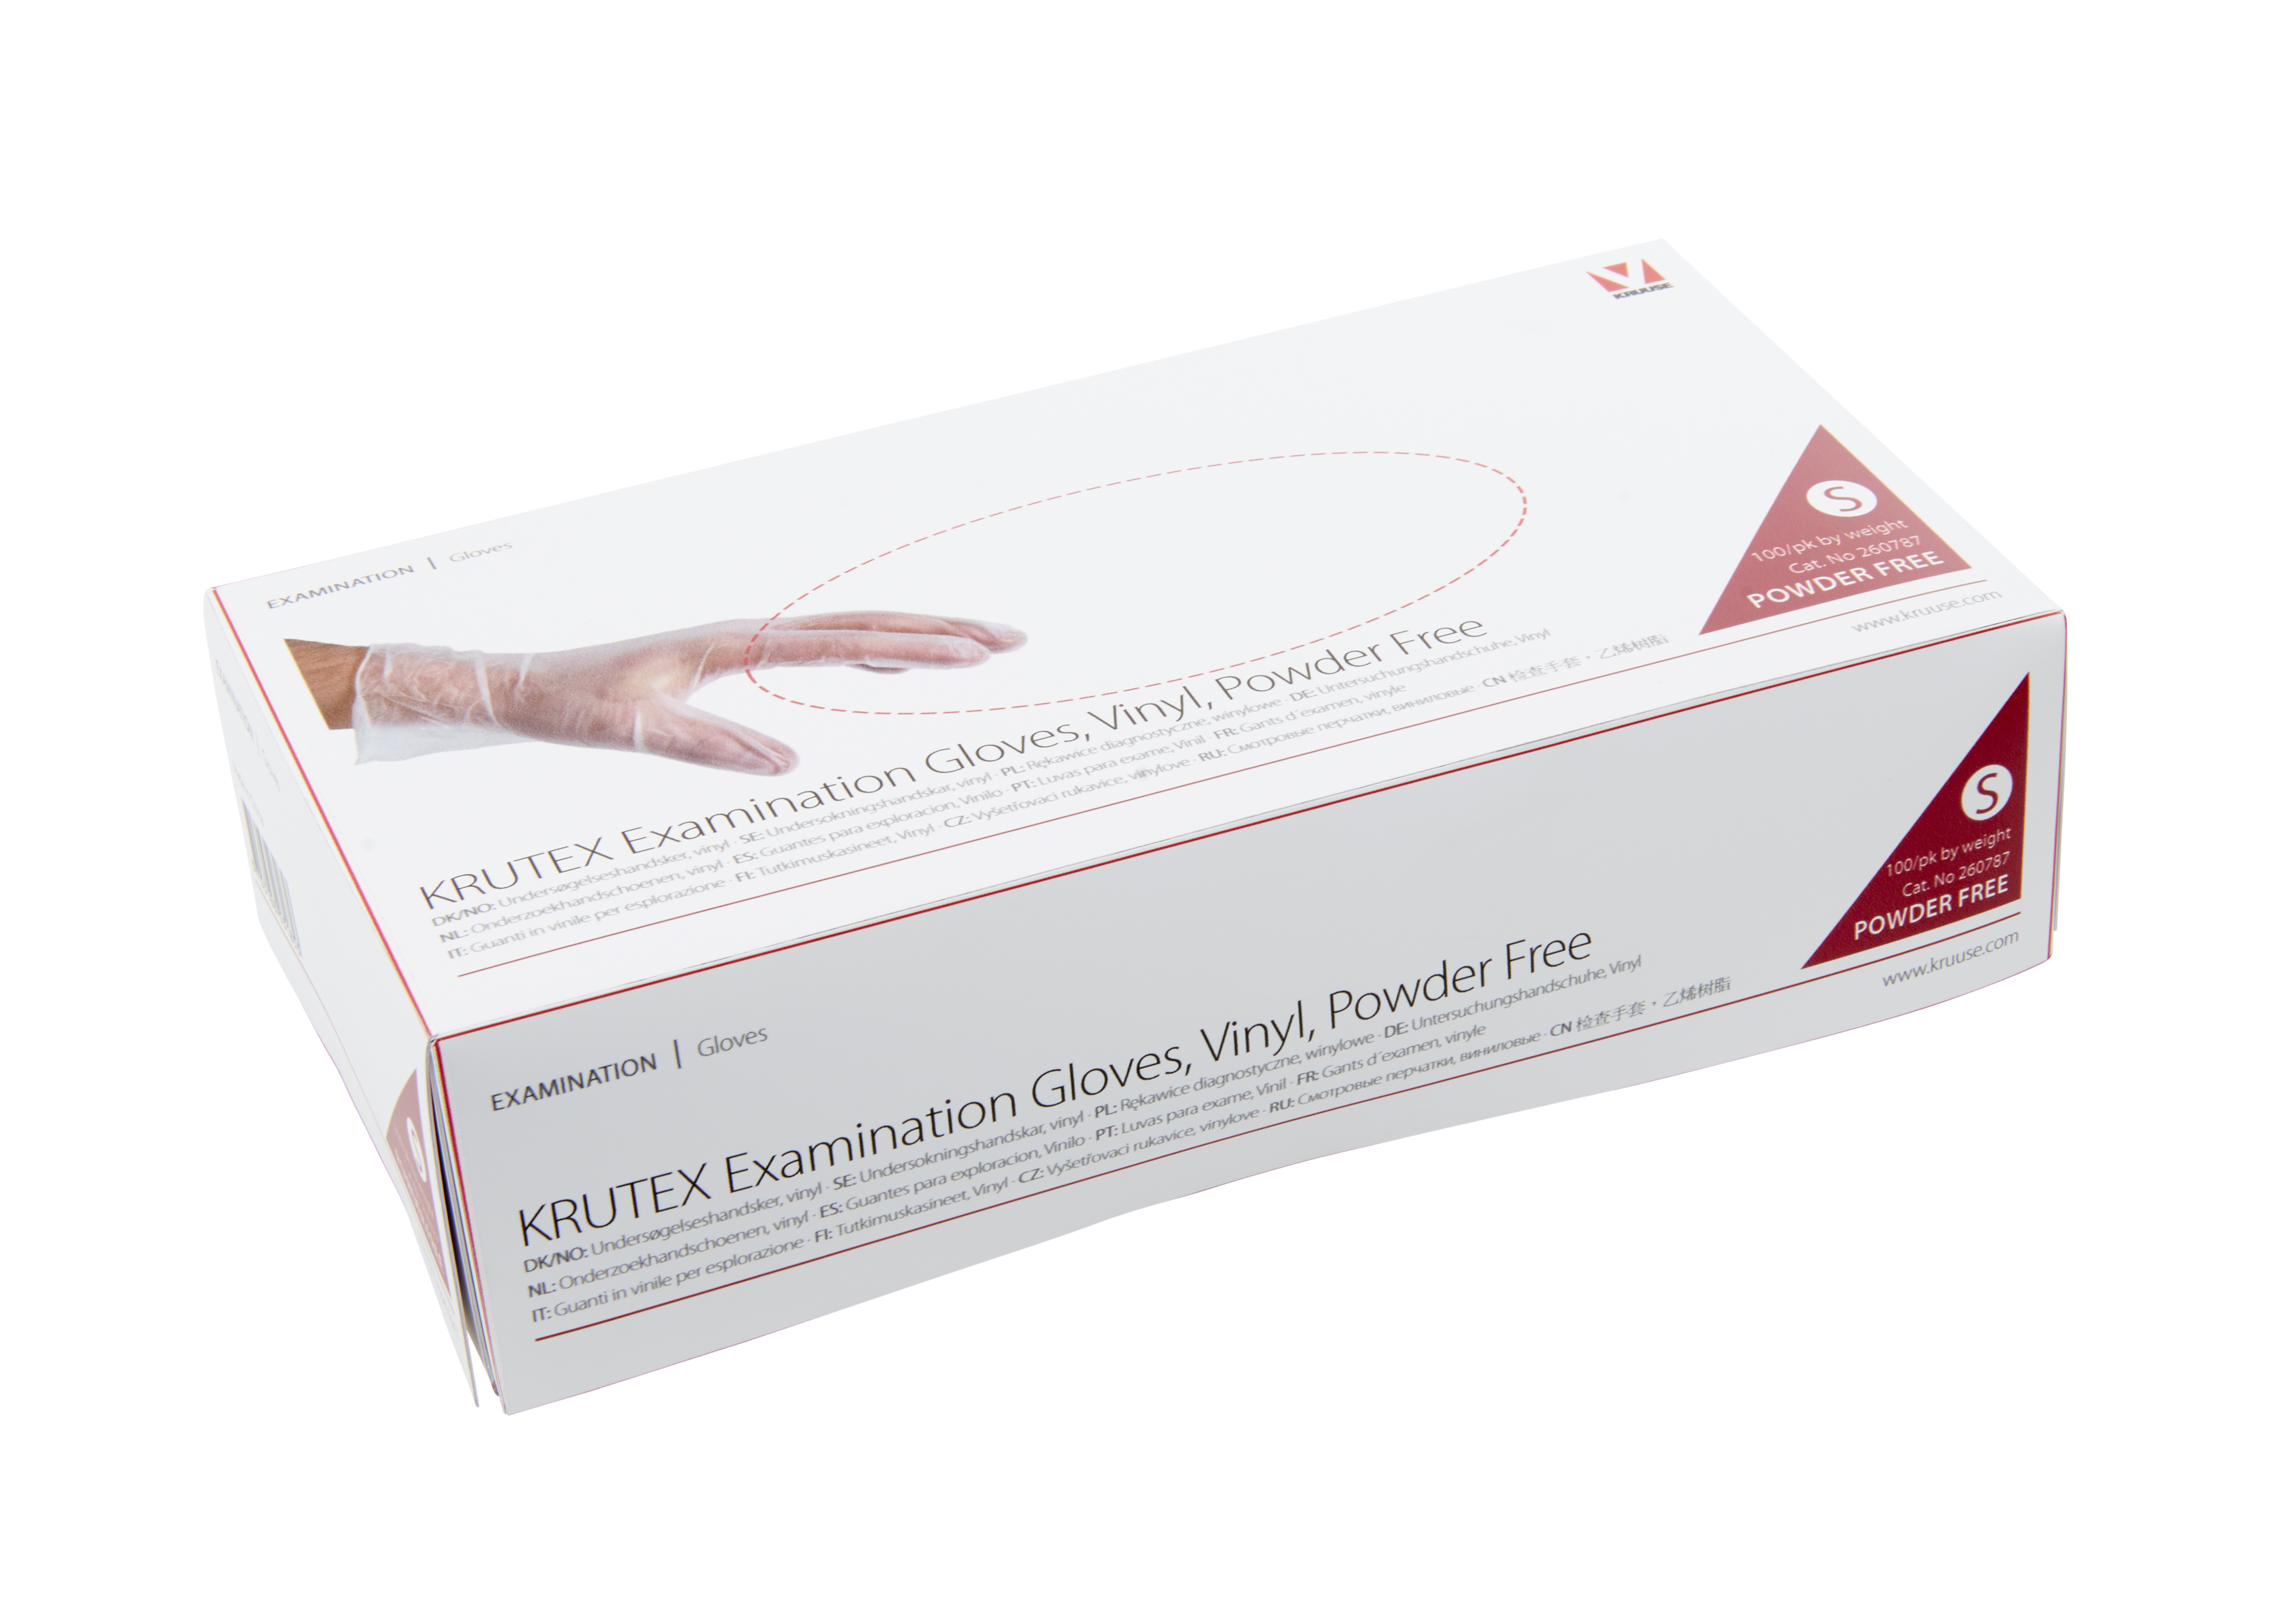 KRUTEX Examination Gloves, vinyl, powder-free, 100/pk